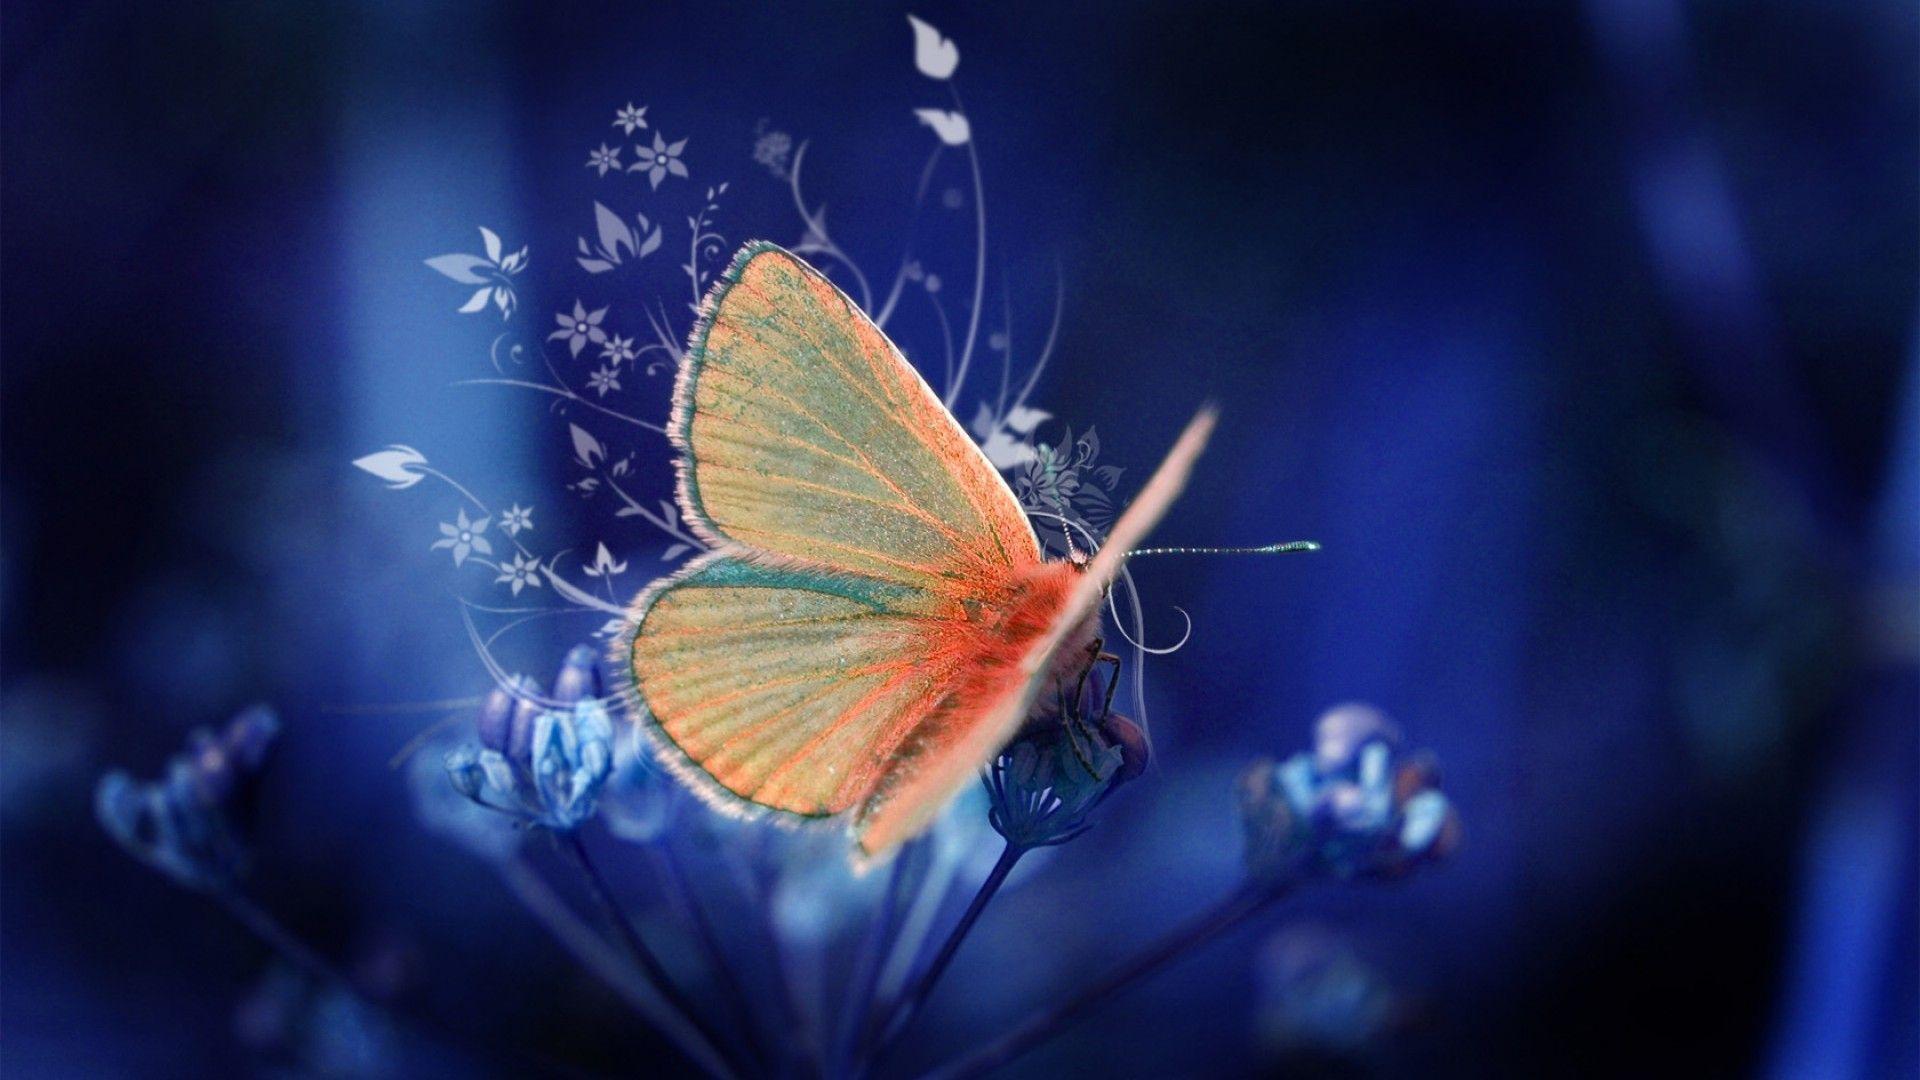 Amazing Butterfly Wallpaper 01. hdwallpaper